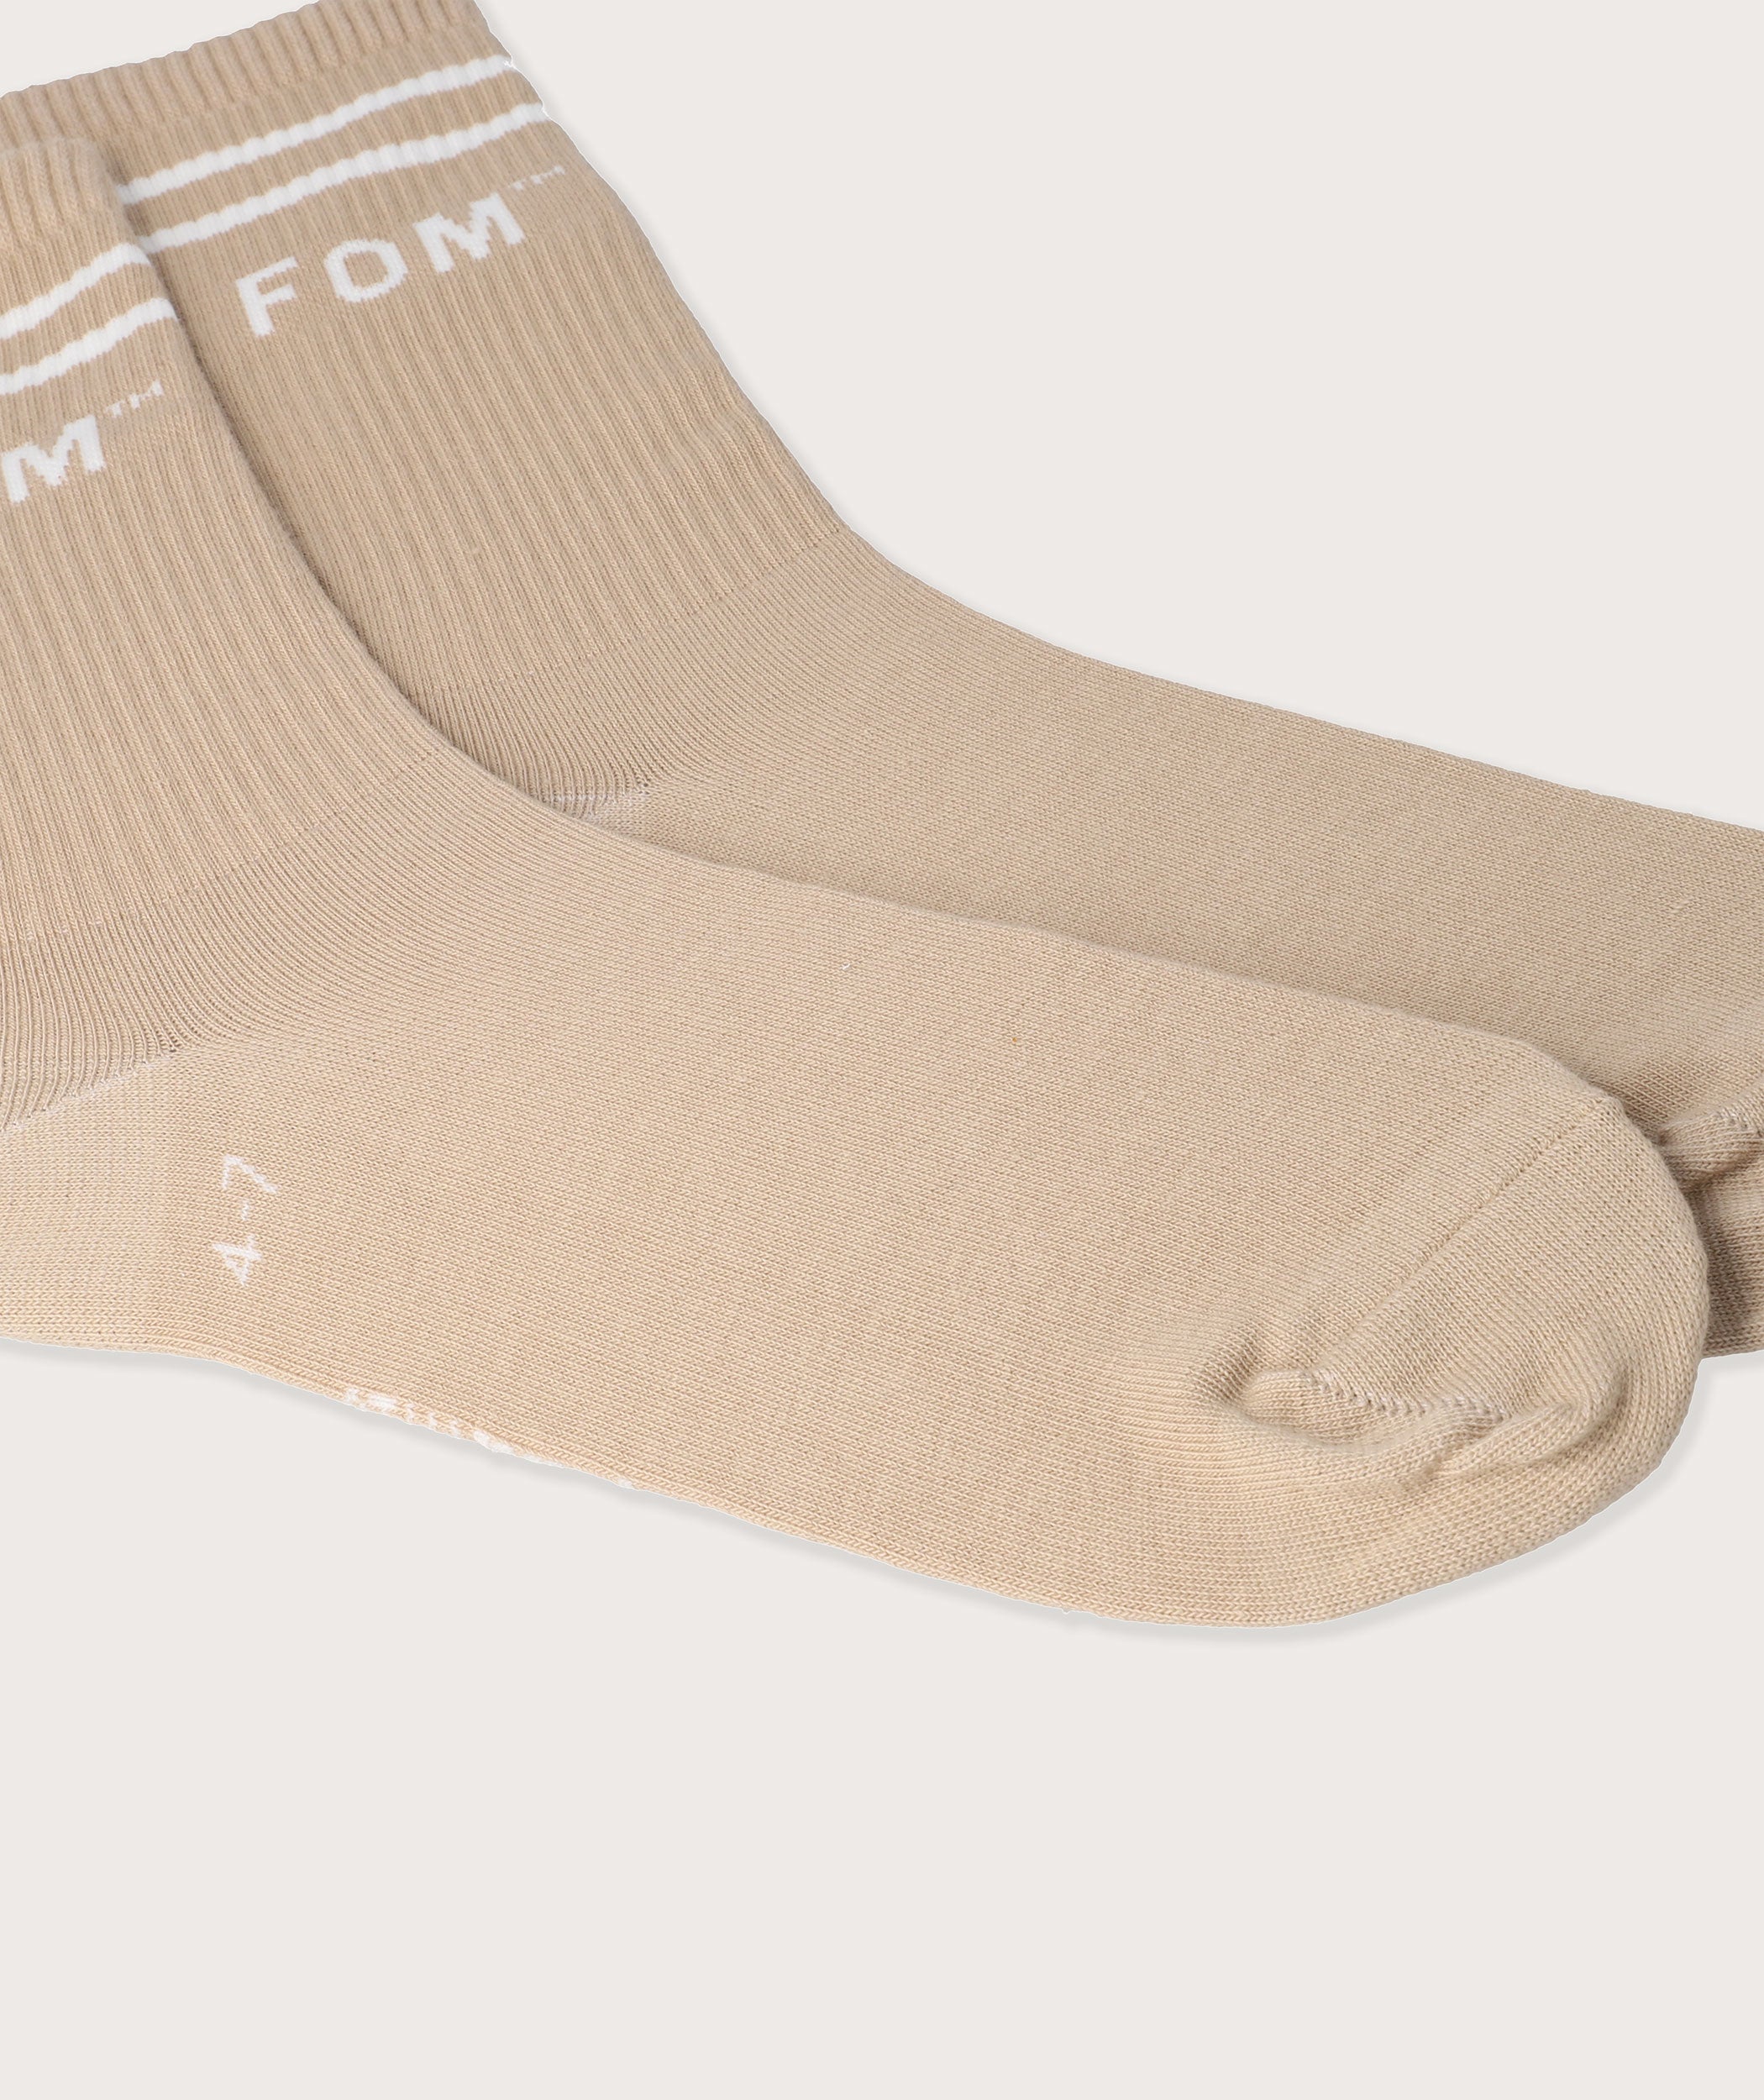 Socks FOM Crew Stone/ White Stripes (Size 4-7)